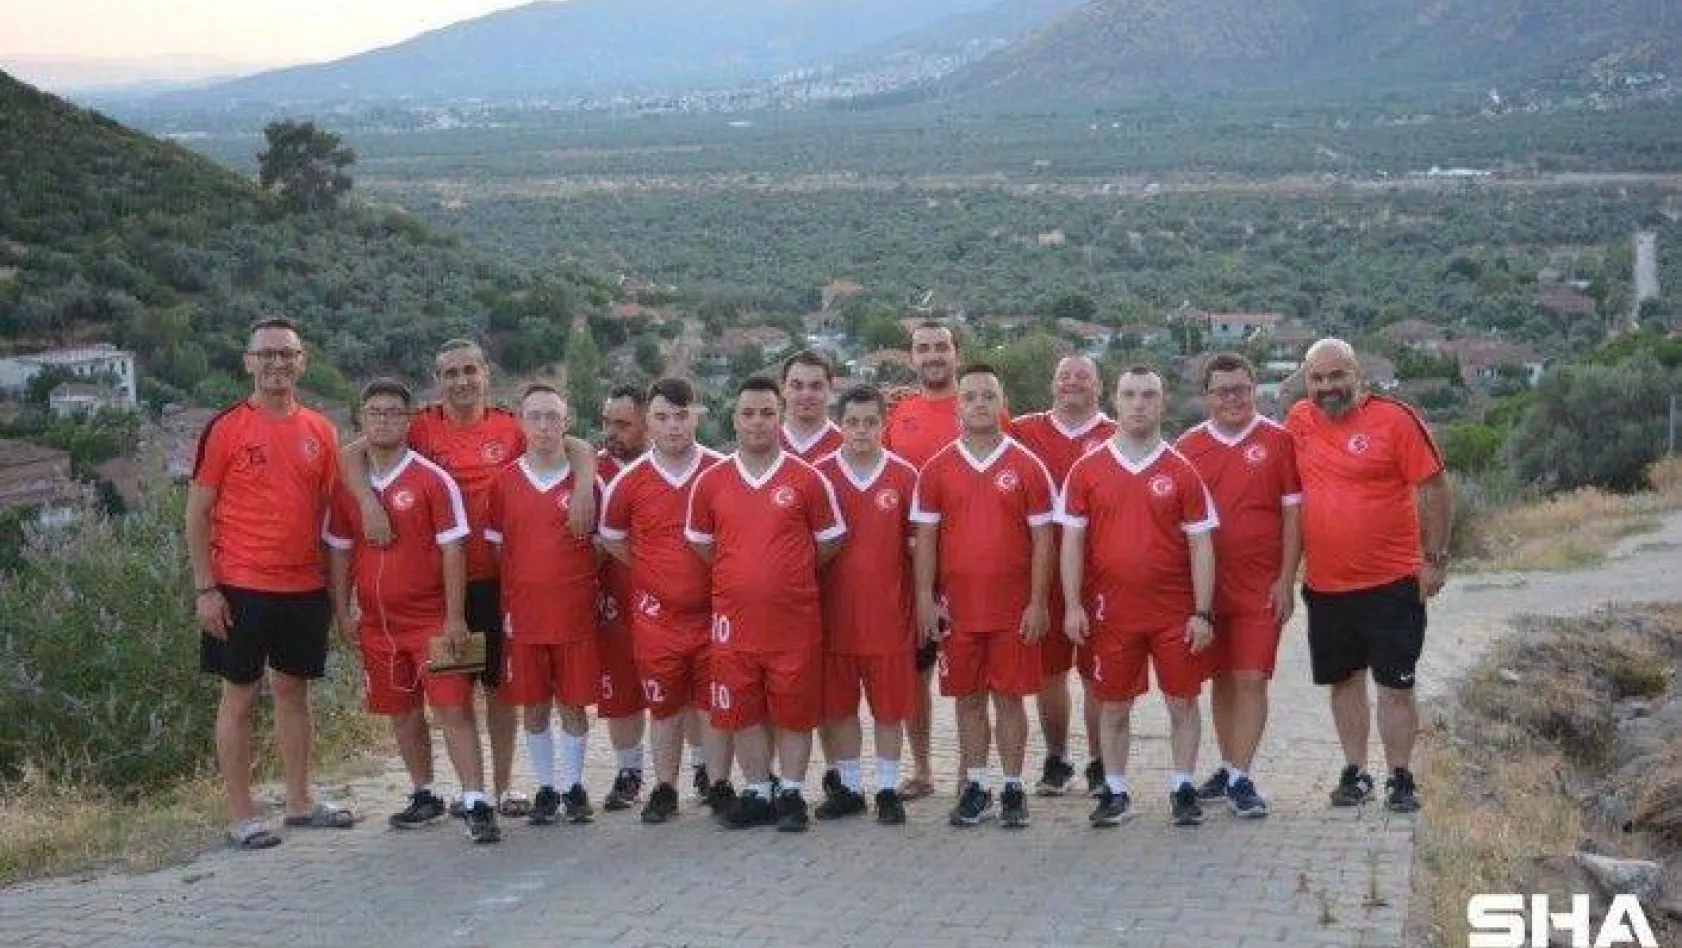 Down Sendromlular Futsal Milli Takımı kampa girdi